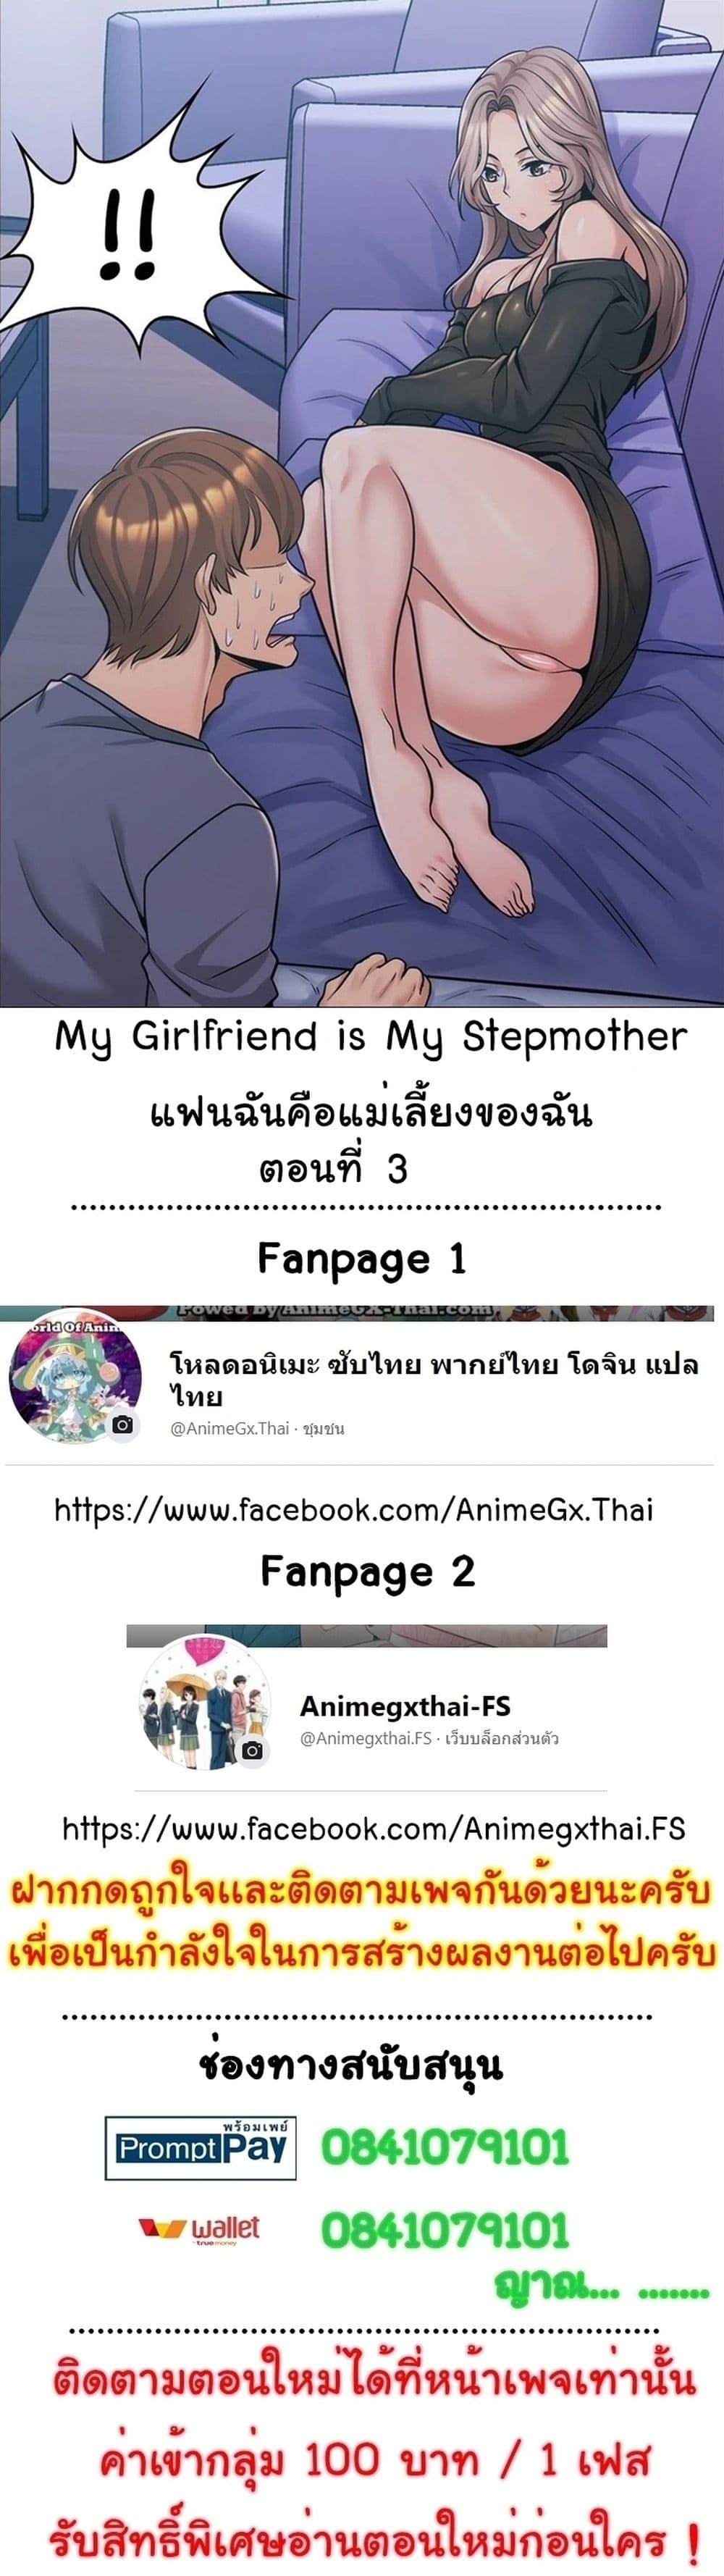 My Girlfriend is My Stepmother 3 01